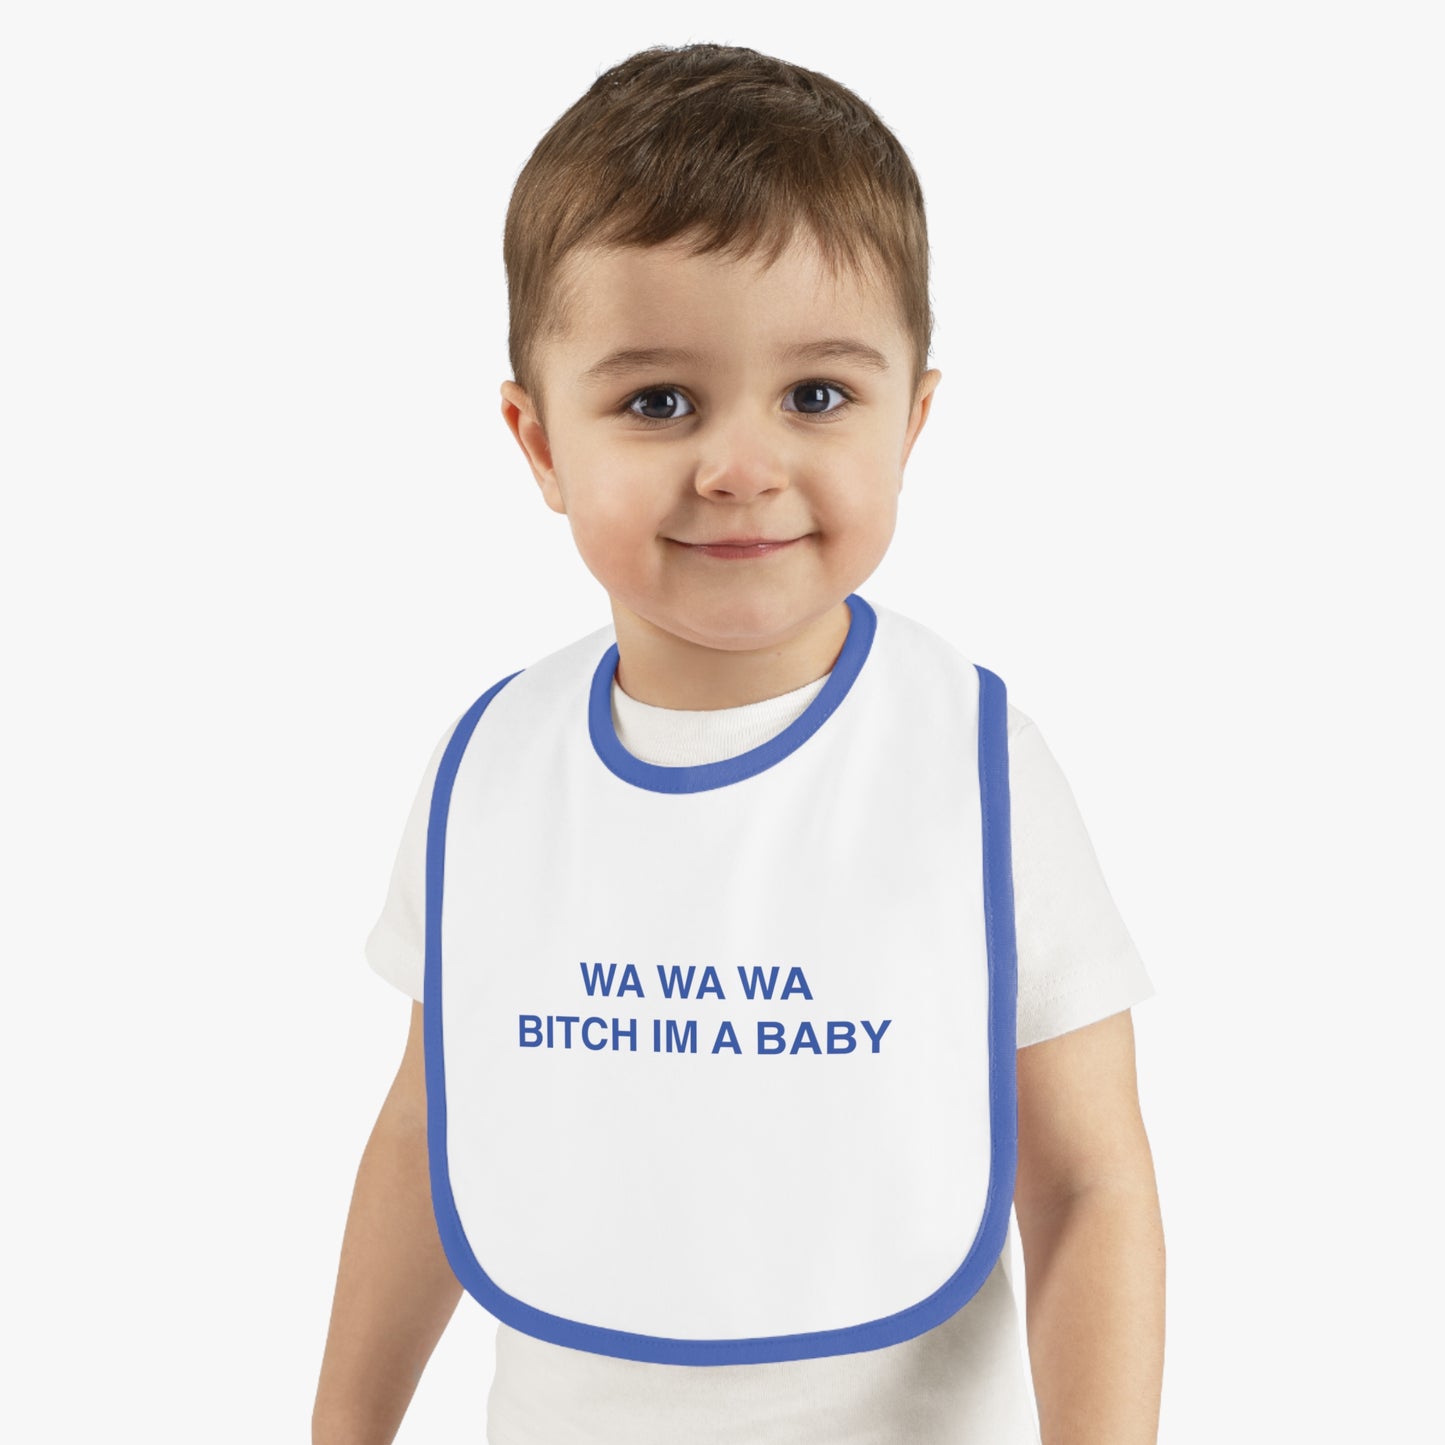 Wa Wa Wa Bitch Im A Baby, Funny Meme Bib